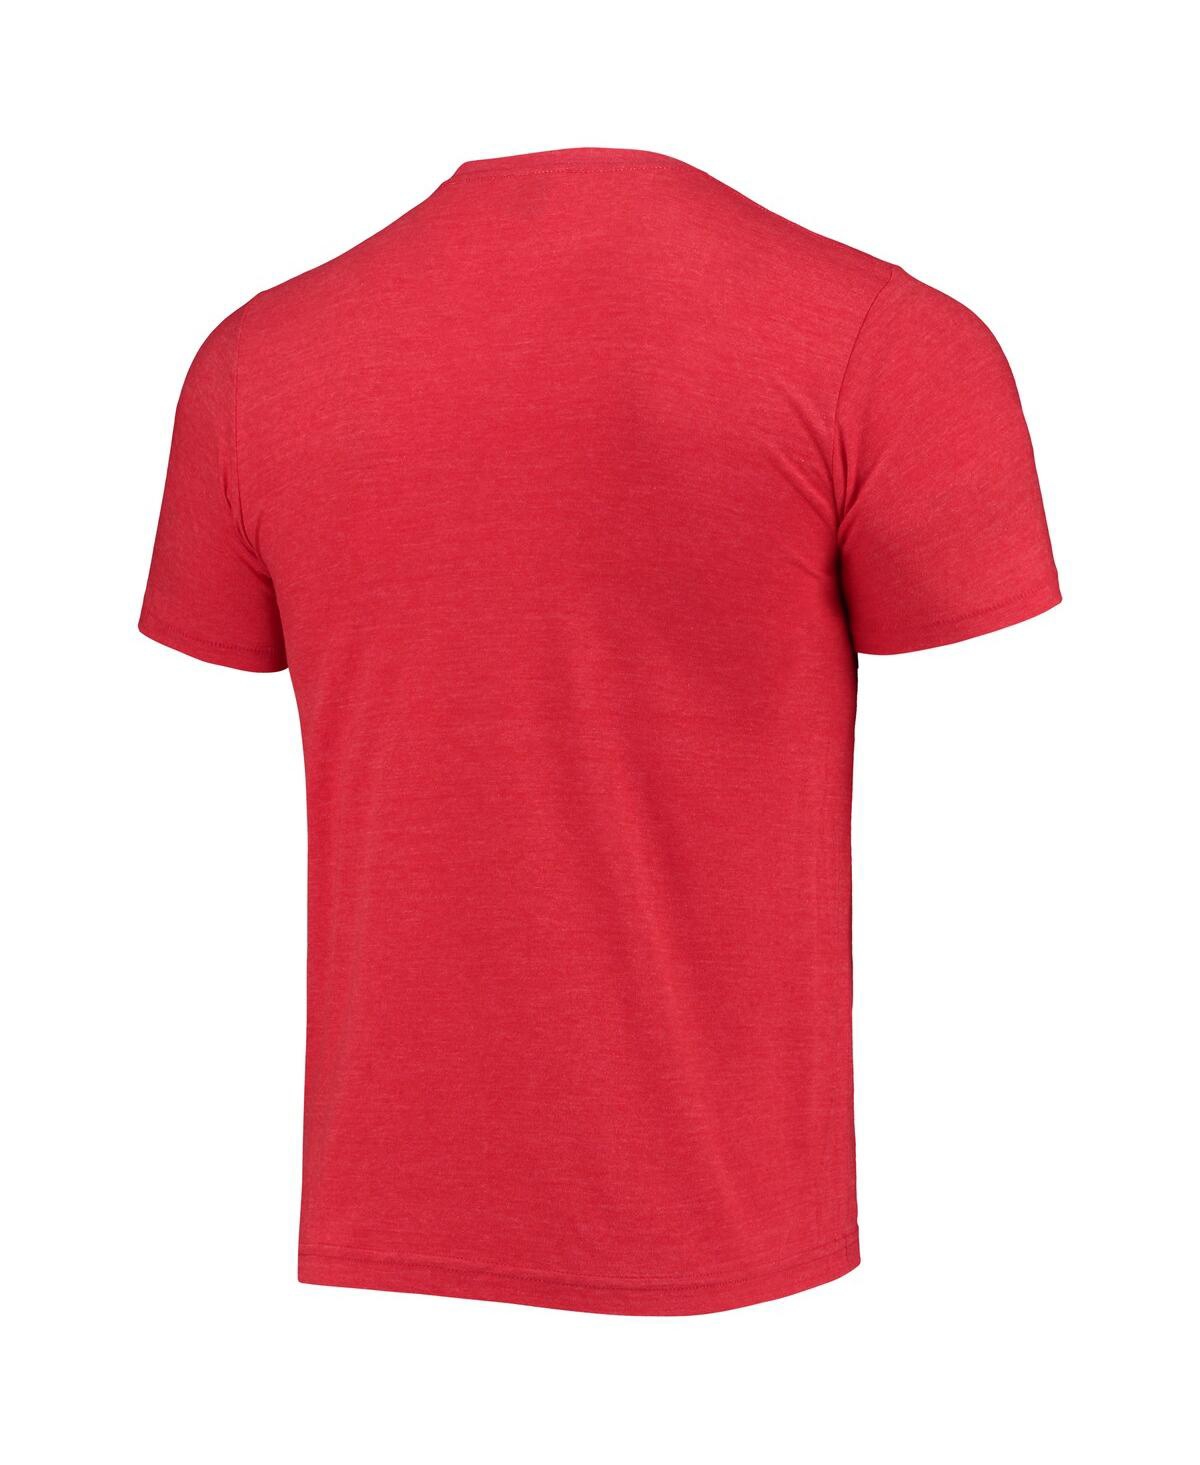 Shop Homage Men's John Collins & Trae Young Heathered Red Nba Jam Tri-blend T-shirt